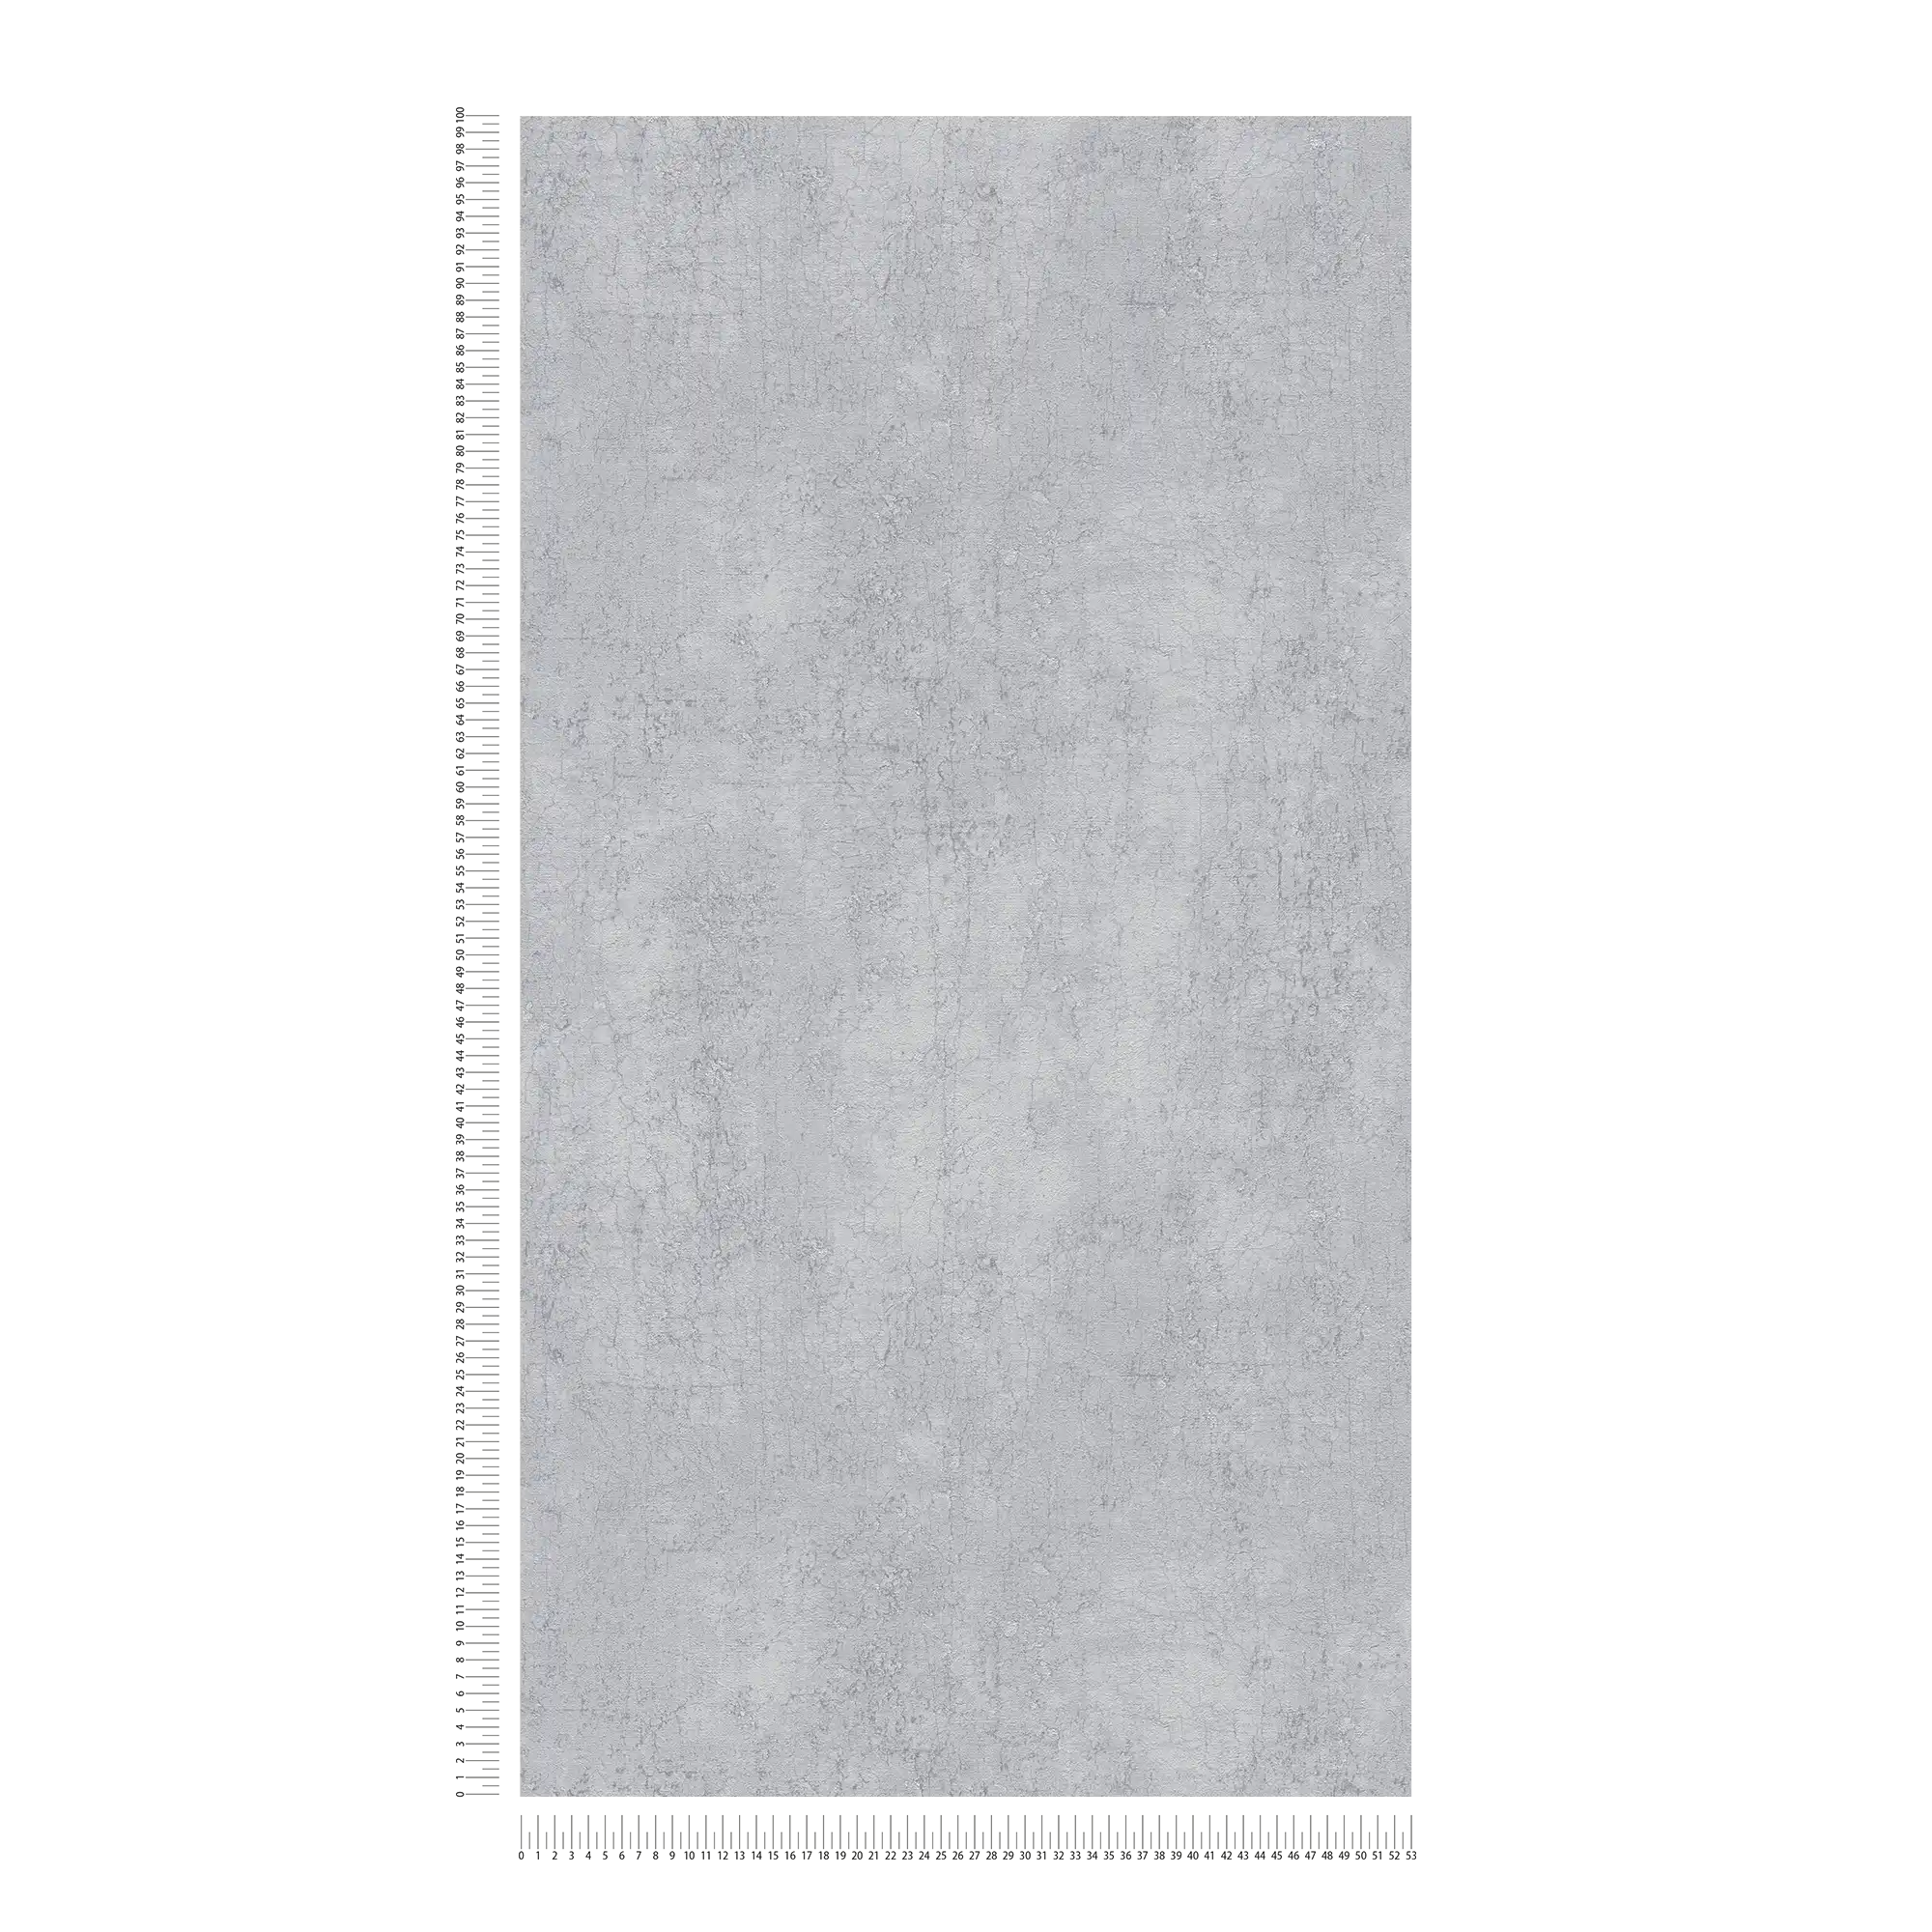             Carta da parati Plaster optic grigio pietra con accenti d'argento - grigio, metallico
        